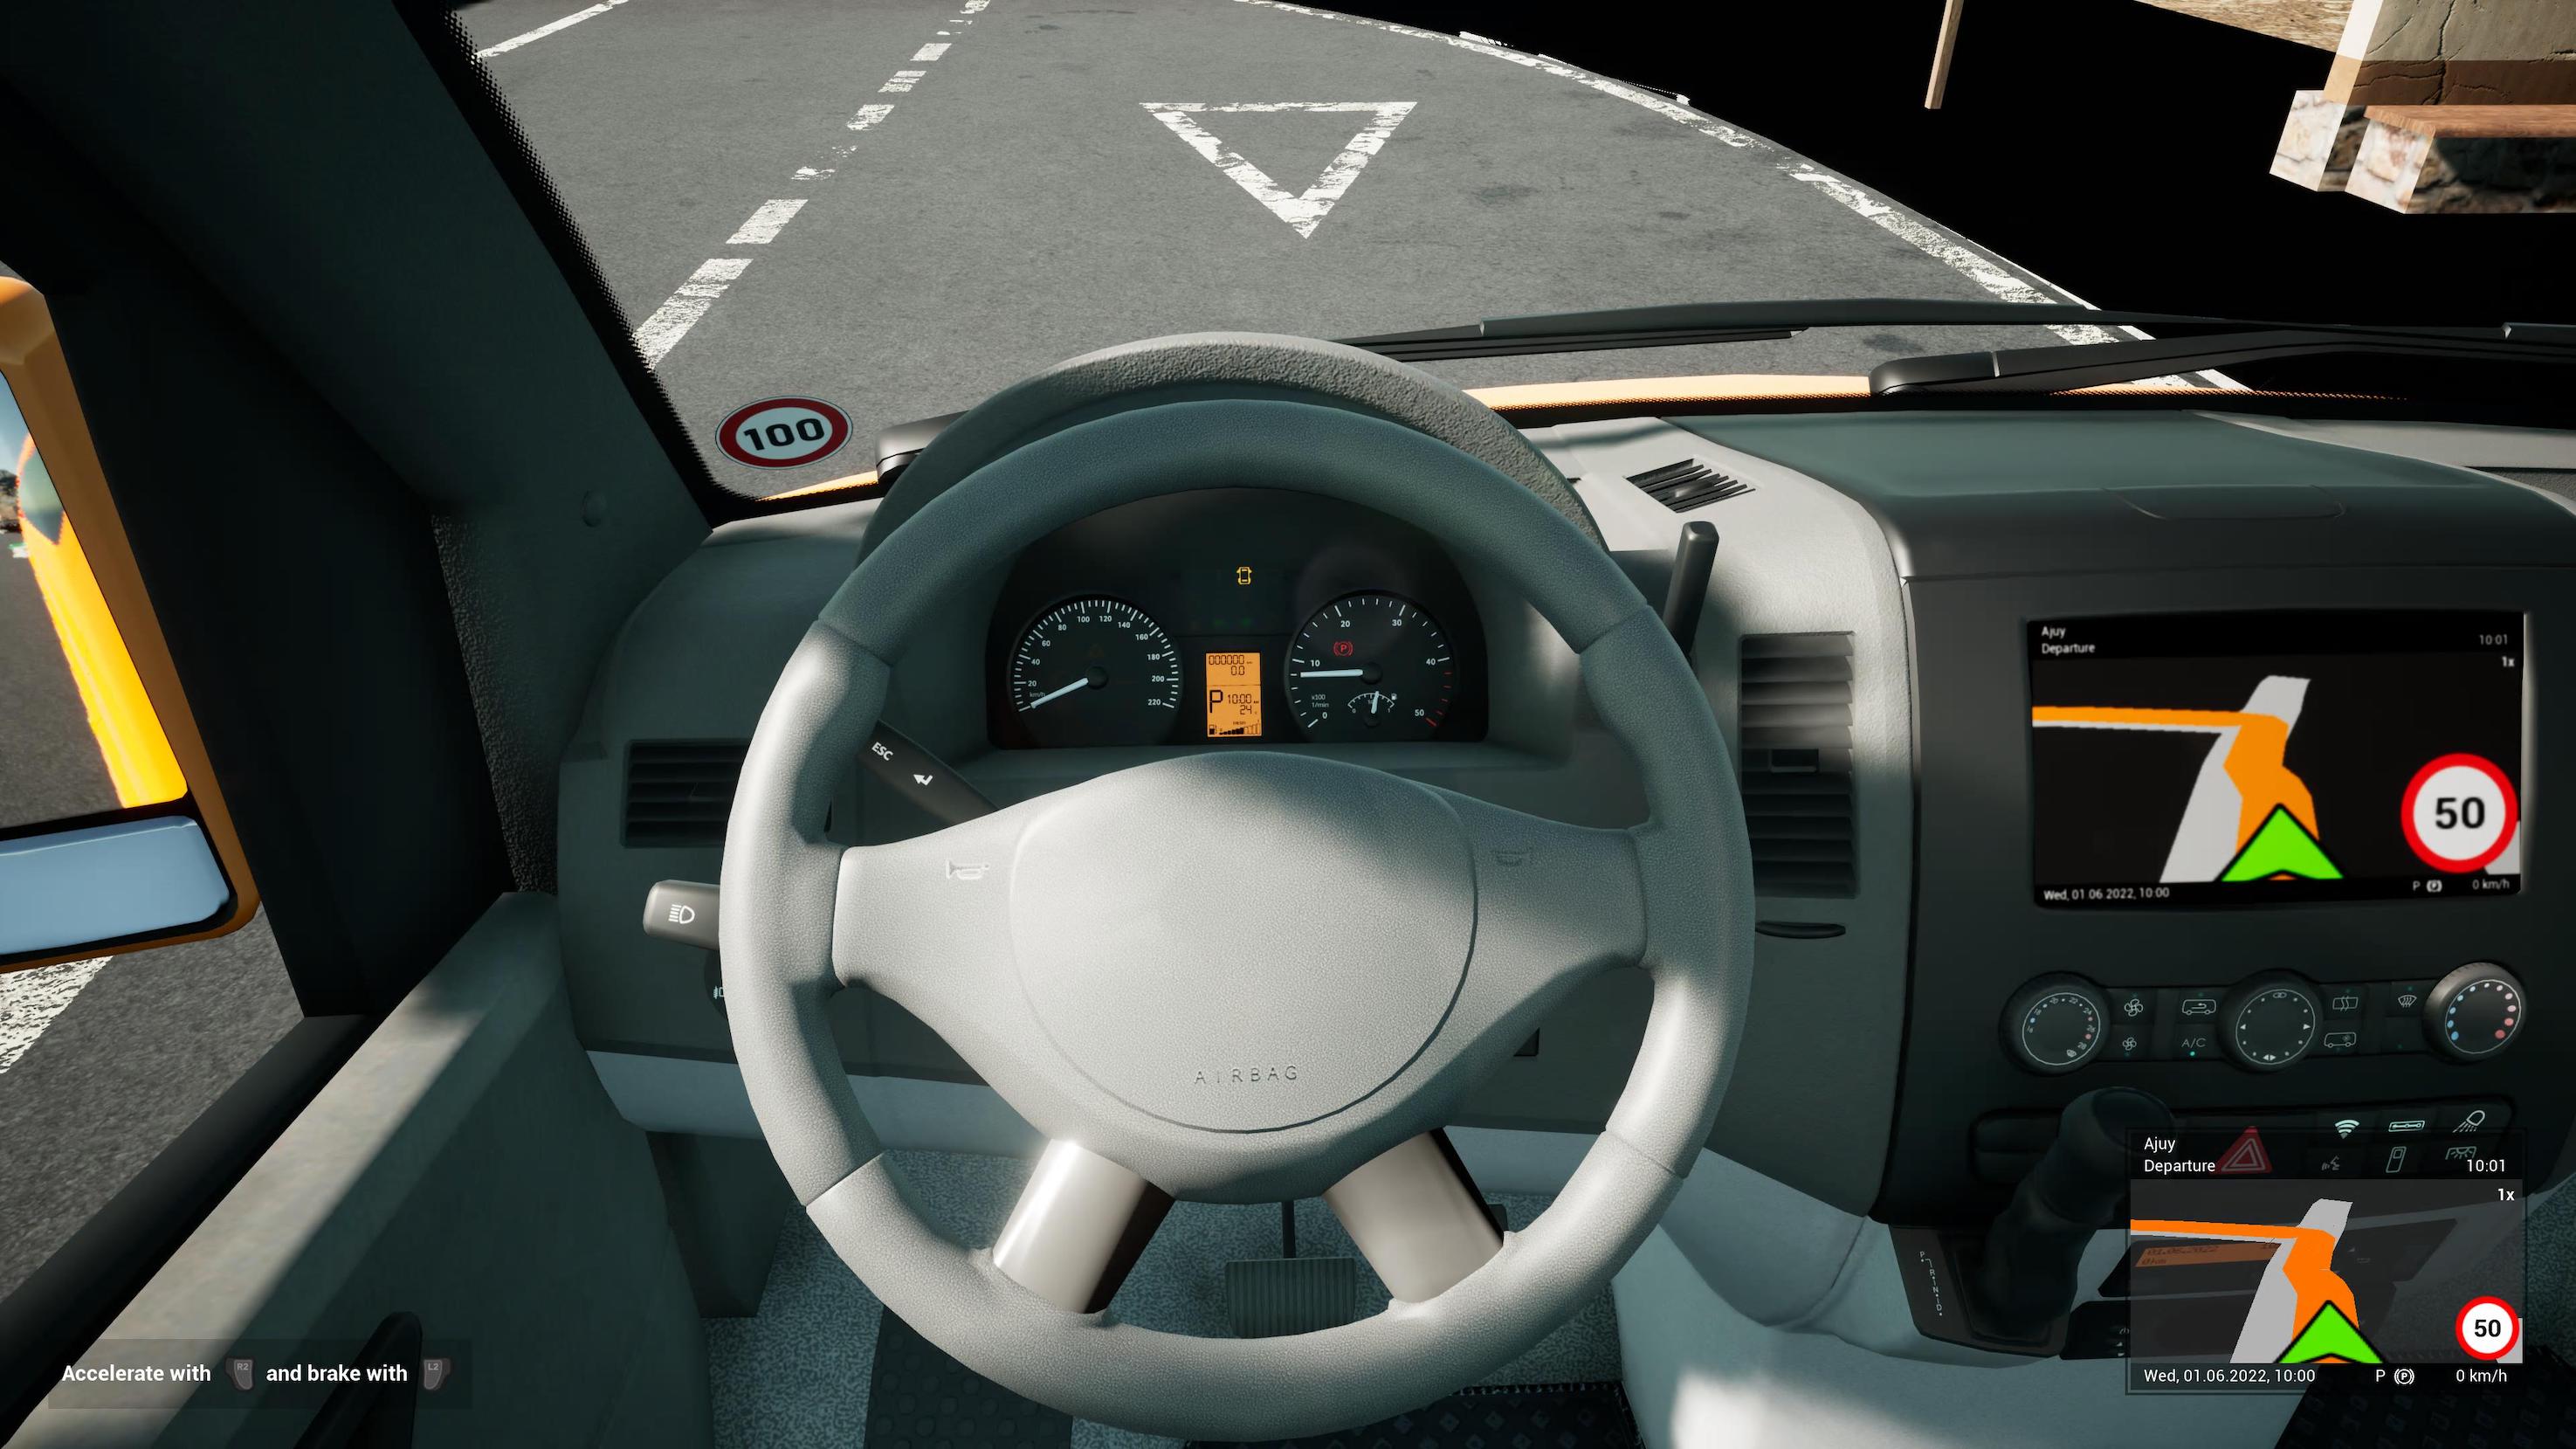 On the Road - Truck Simulator (PS5) & Tourist Bus Simulator (PS5)